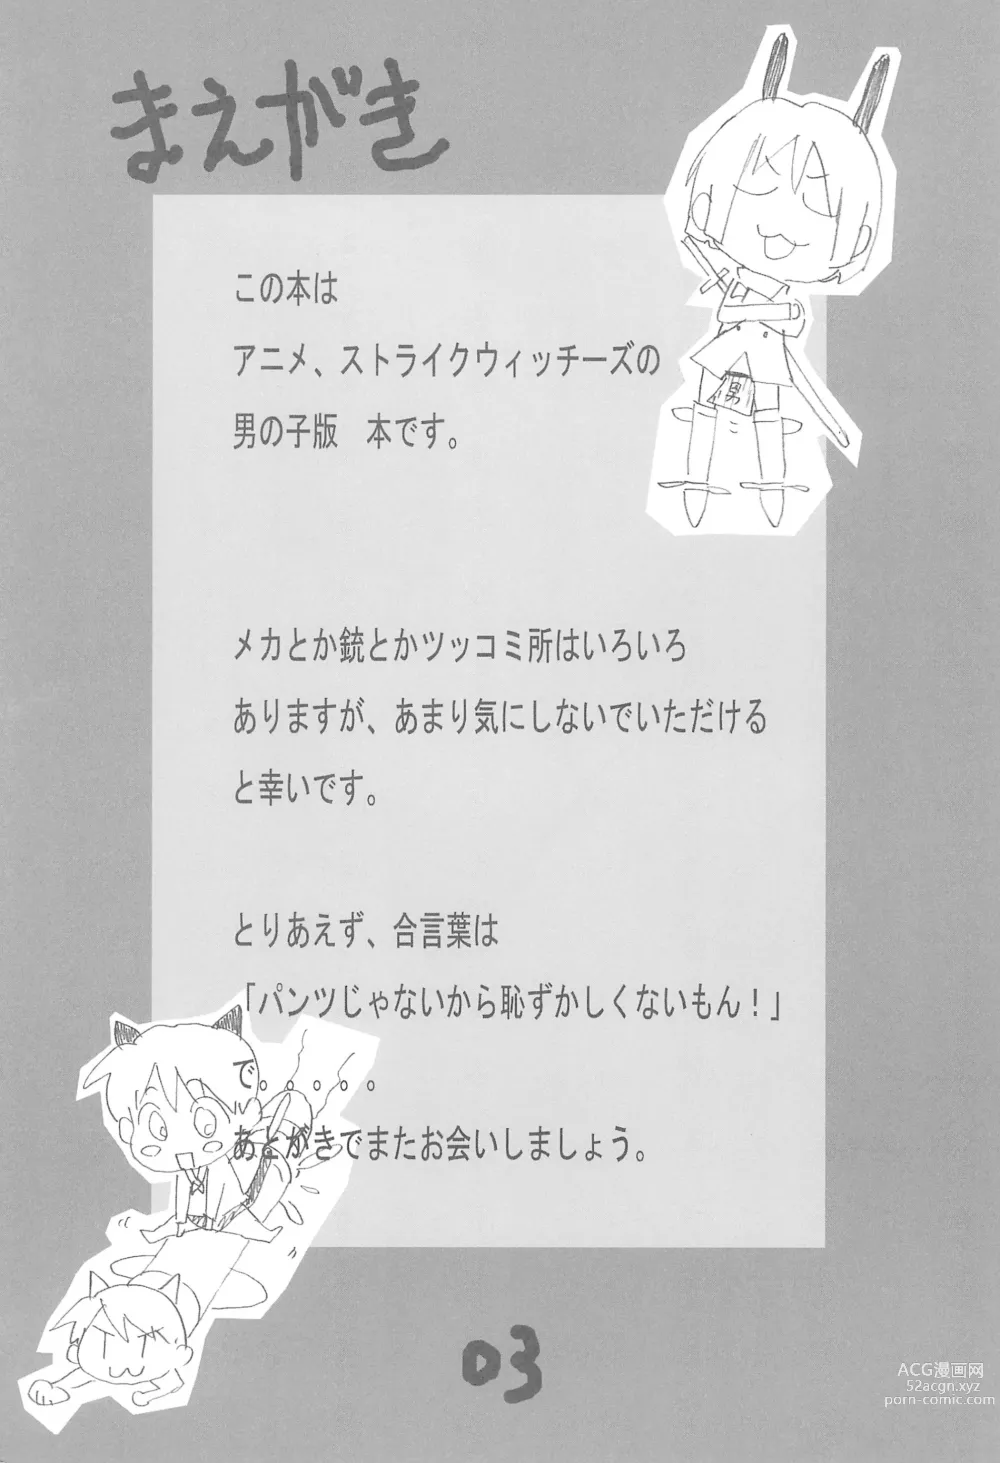 Page 3 of doujinshi STRIKE BOYS